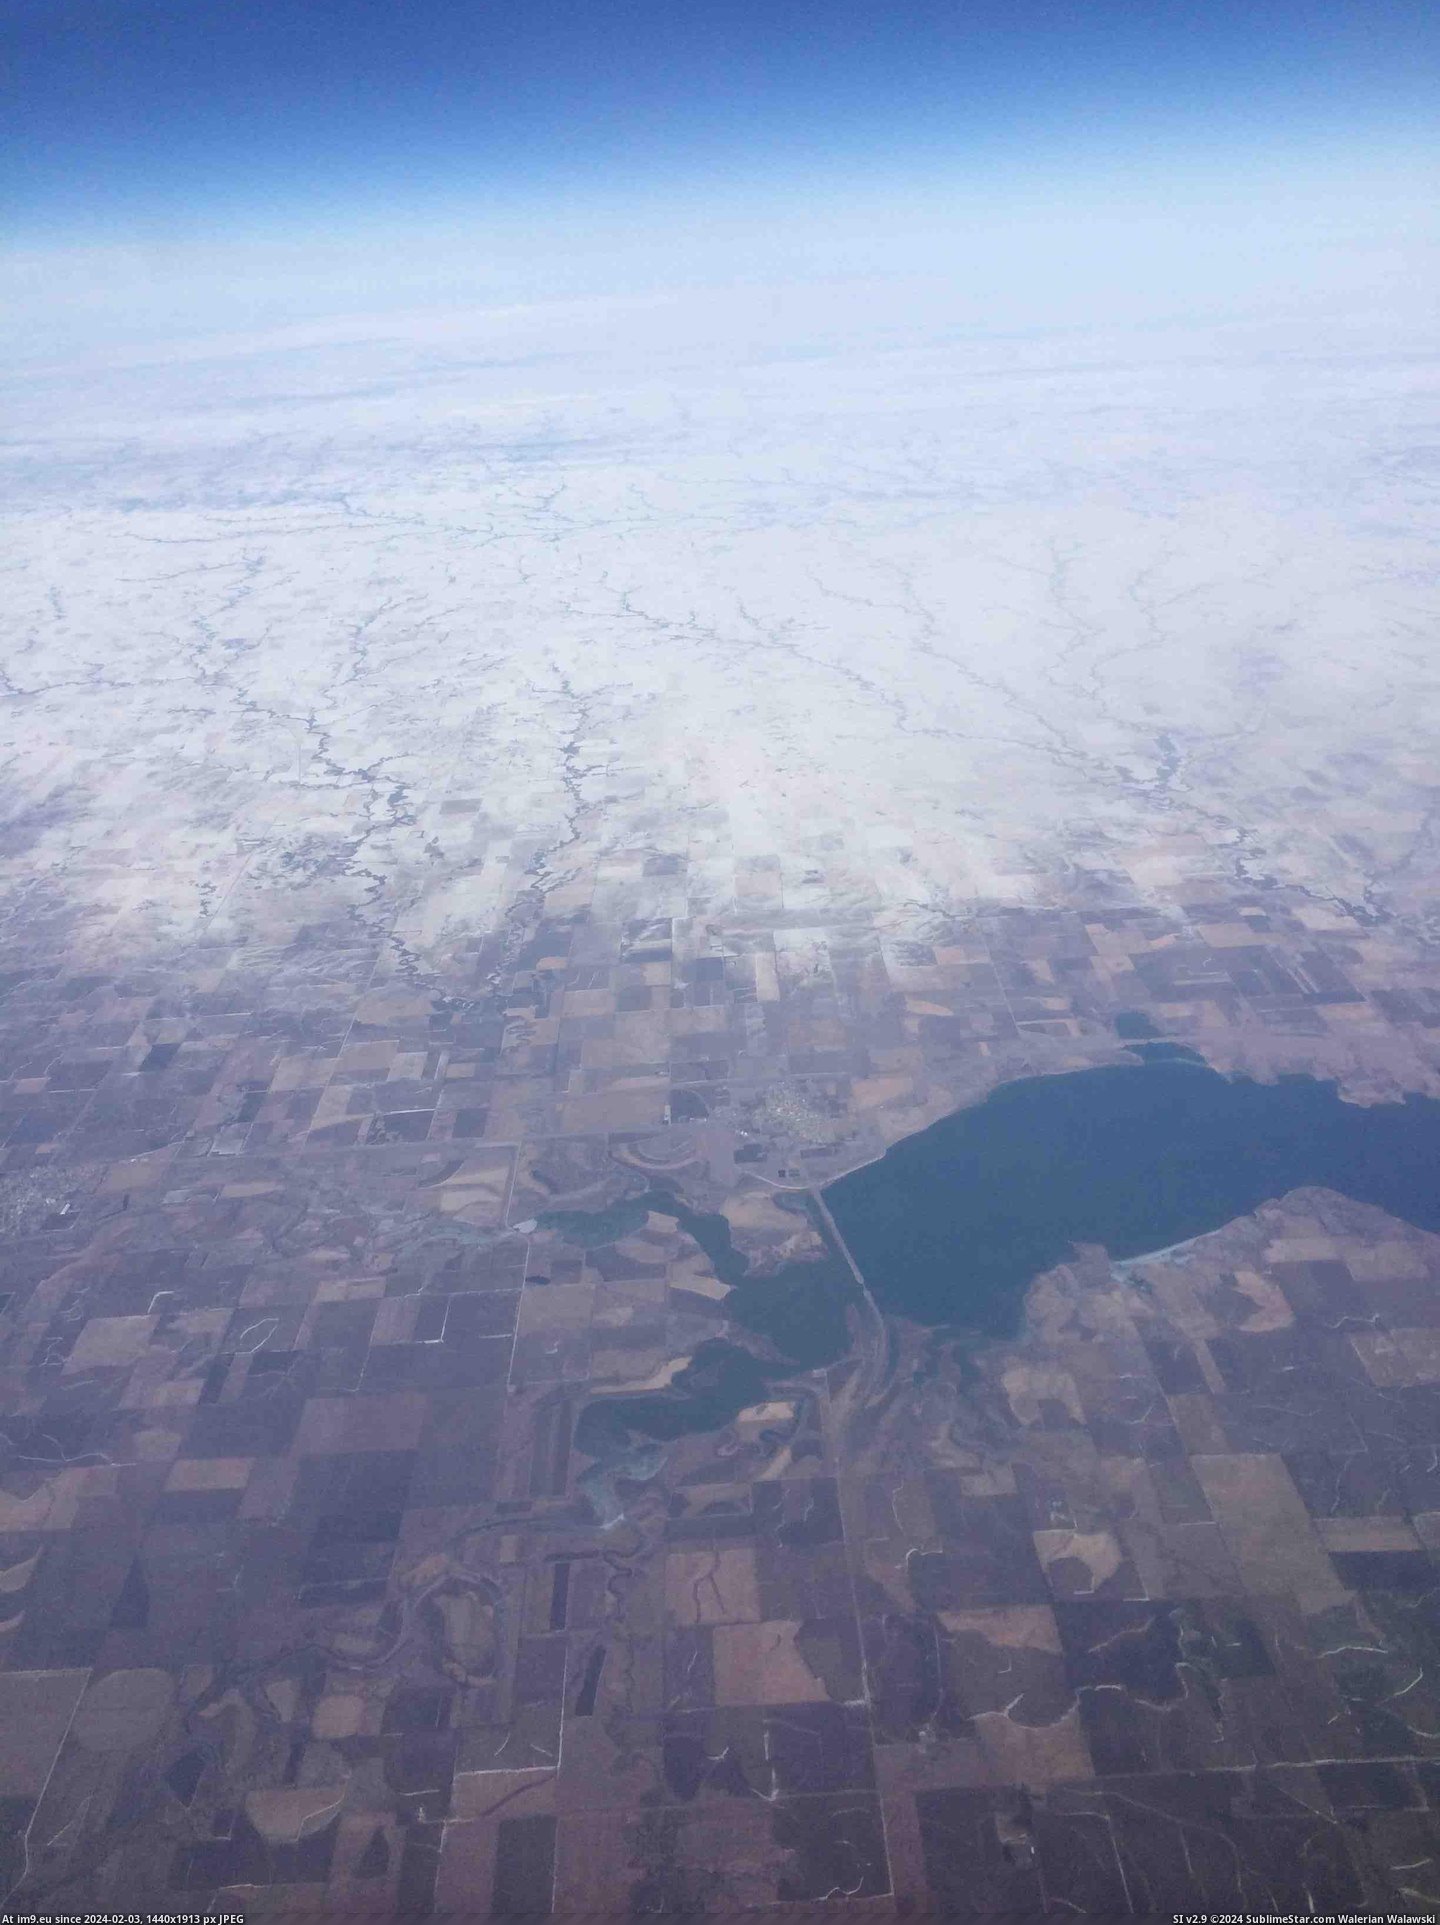 #Hit #Weekend #Flew #Snowstorm #Chicago #Edge [Mildlyinteresting] I flew over the edge of the snowstorm that hit Chicago last weekend. Pic. (Bild von album My r/MILDLYINTERESTING favs))